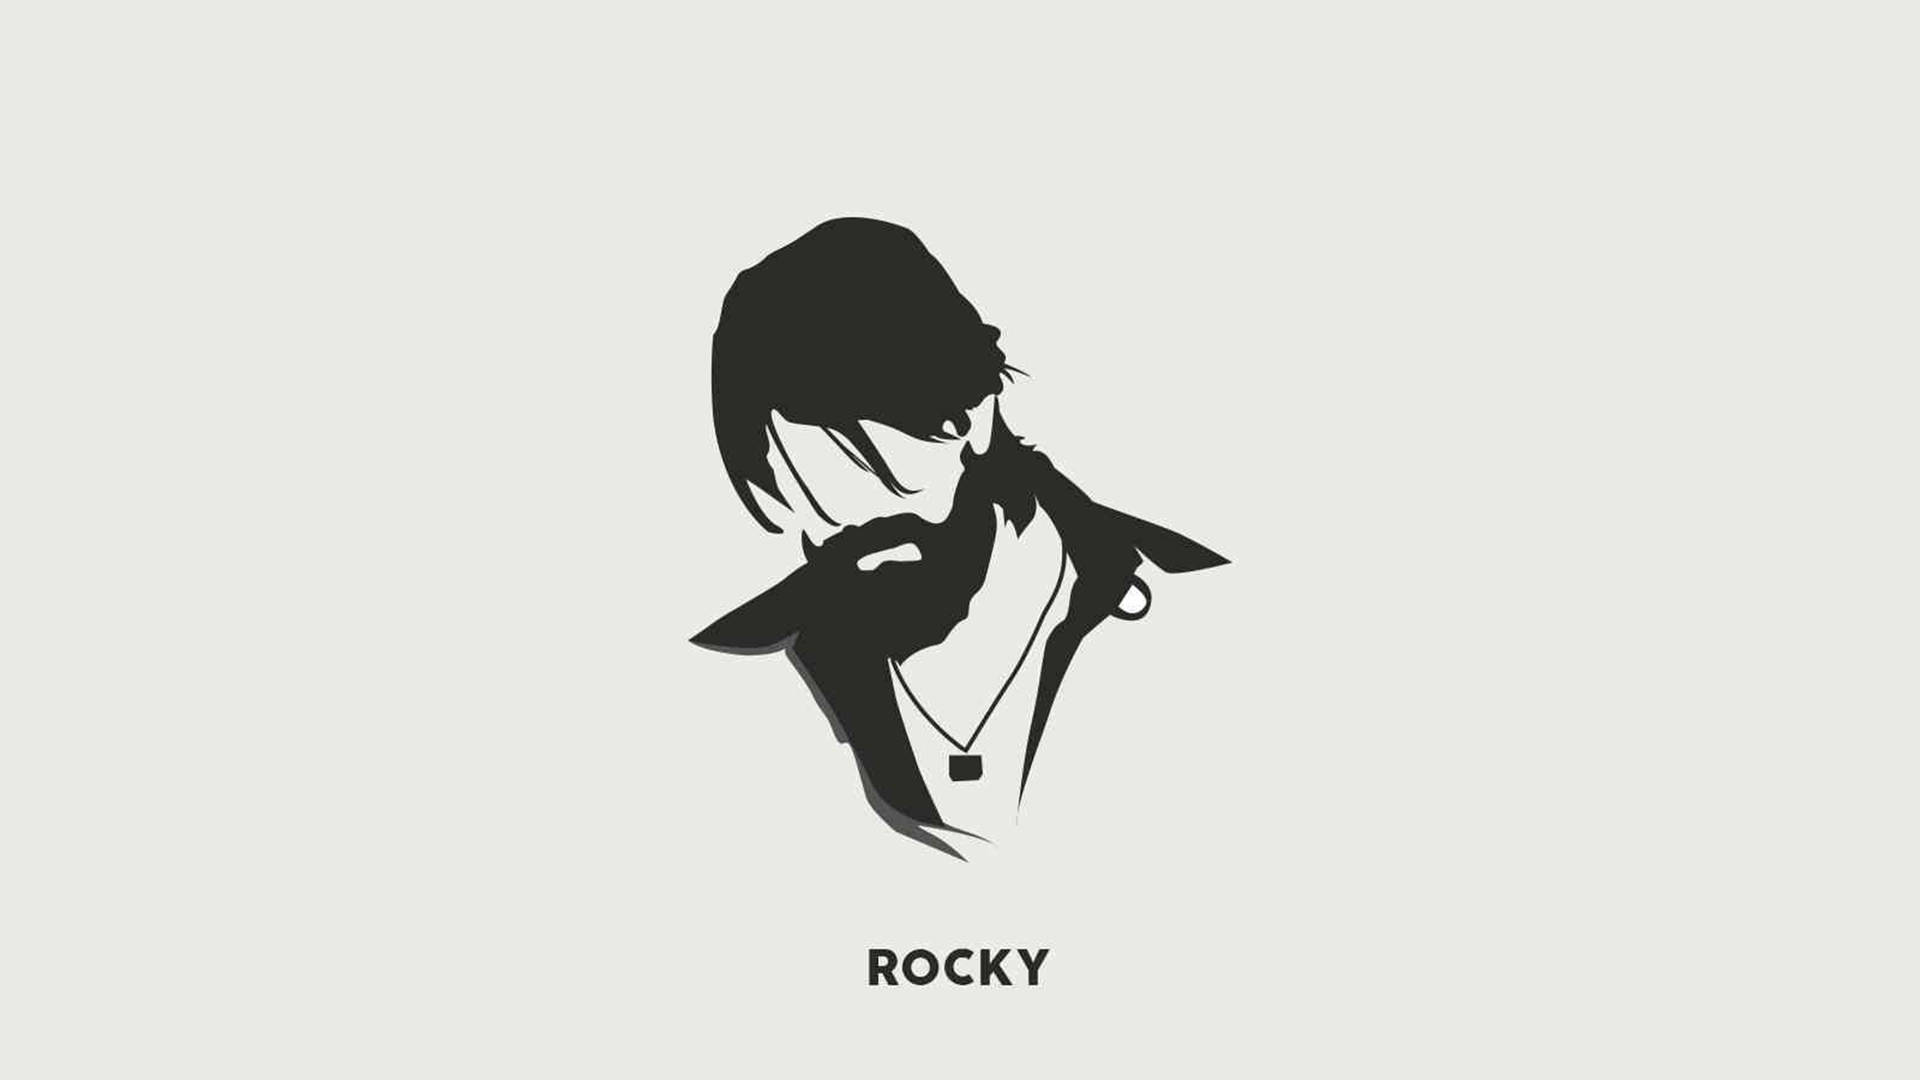 Kgf 4k Rocky Face Silhouette